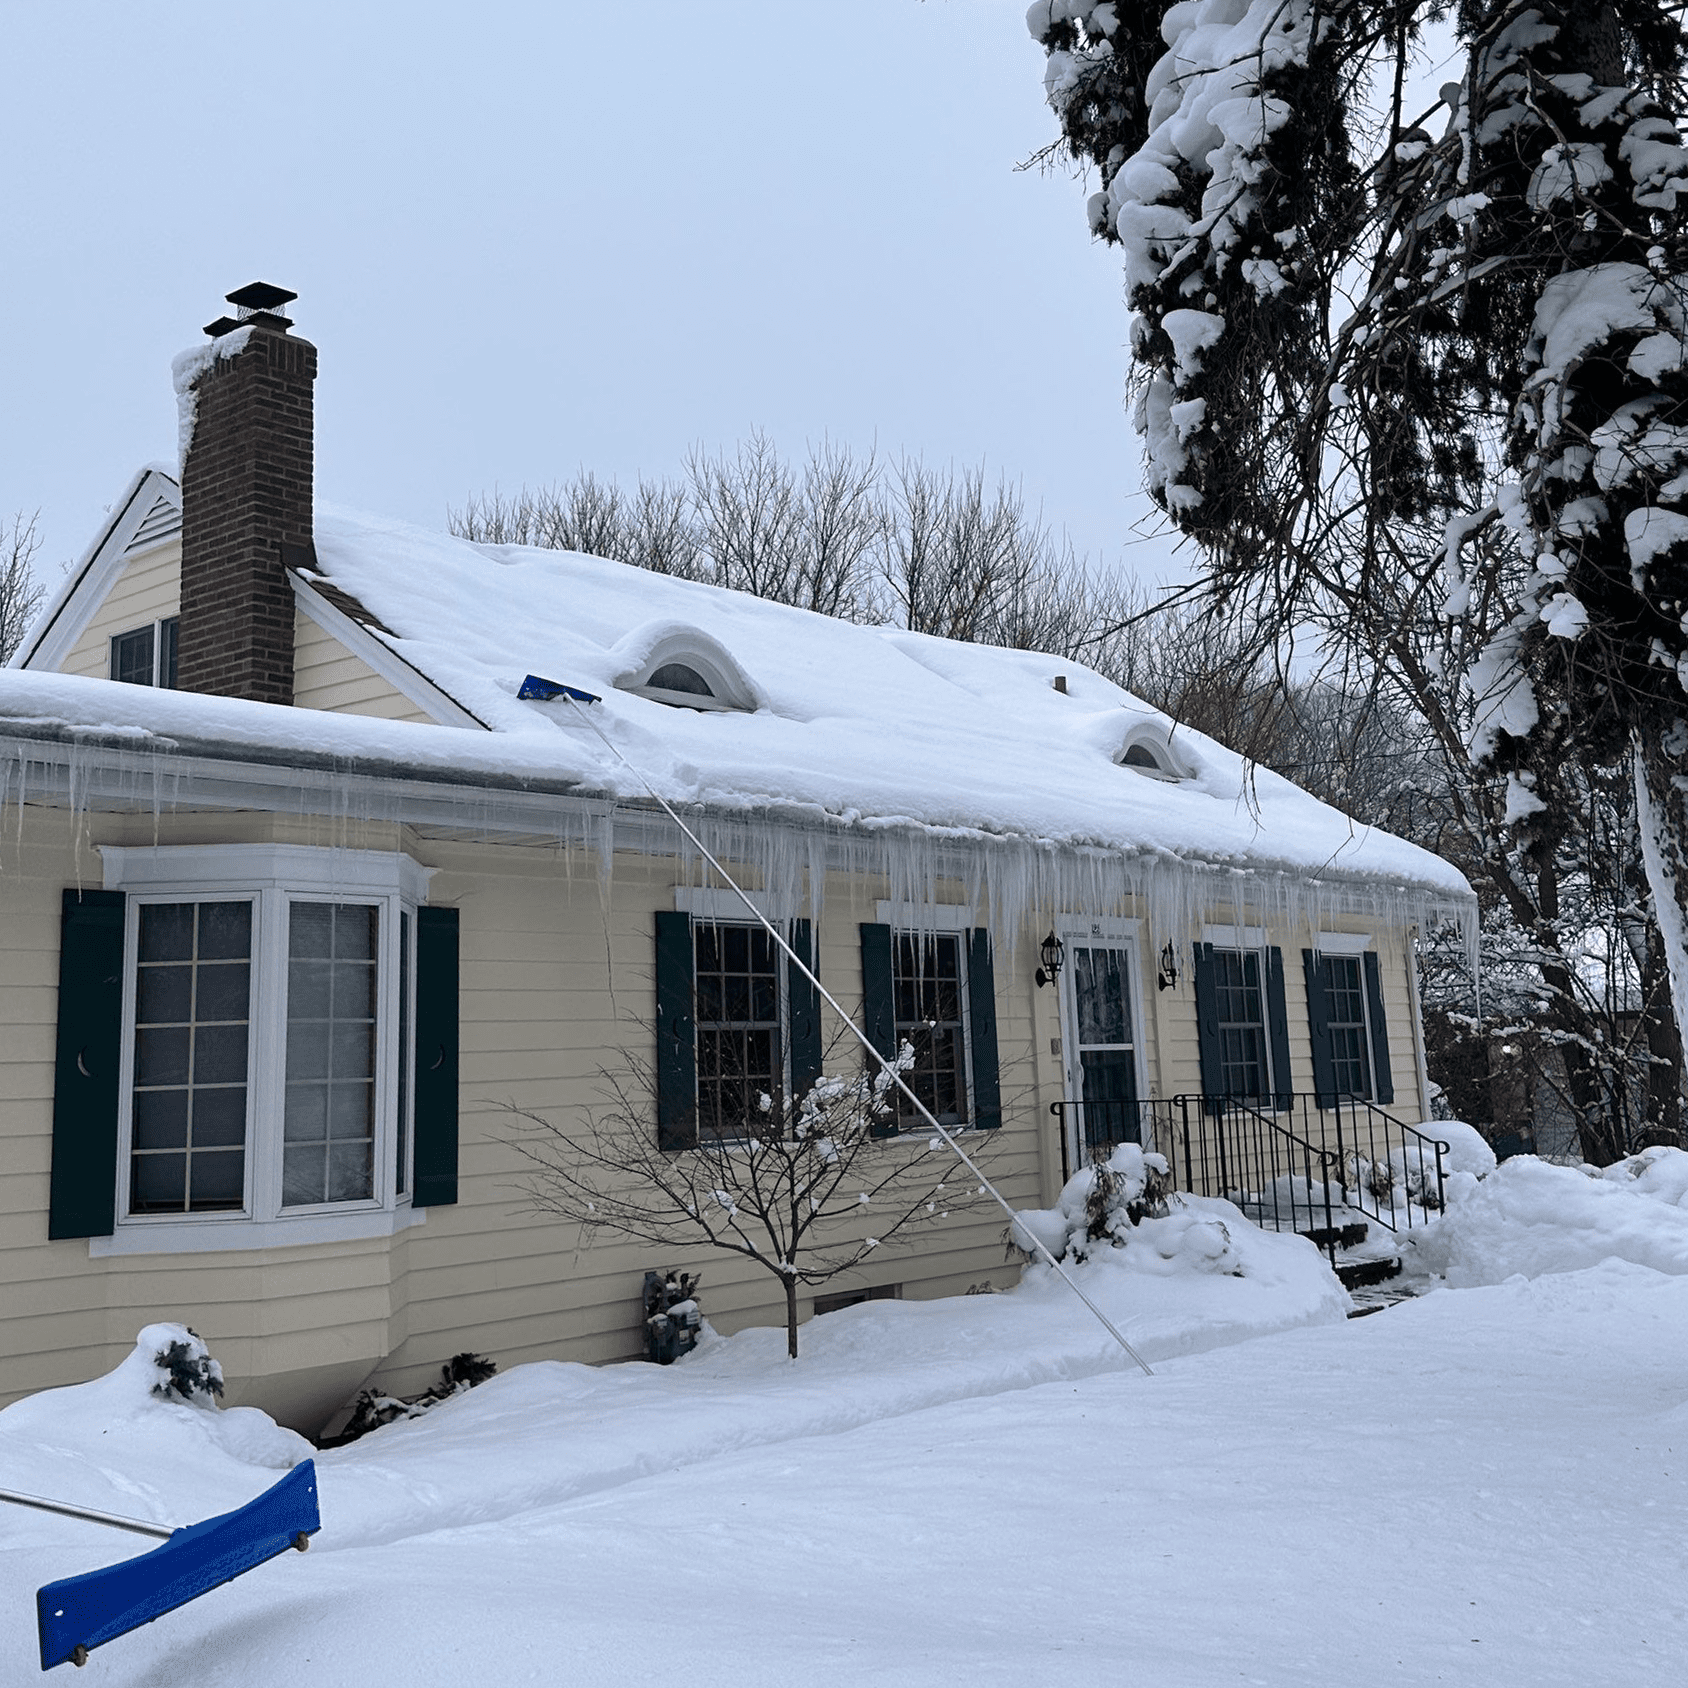 Snow On Roof